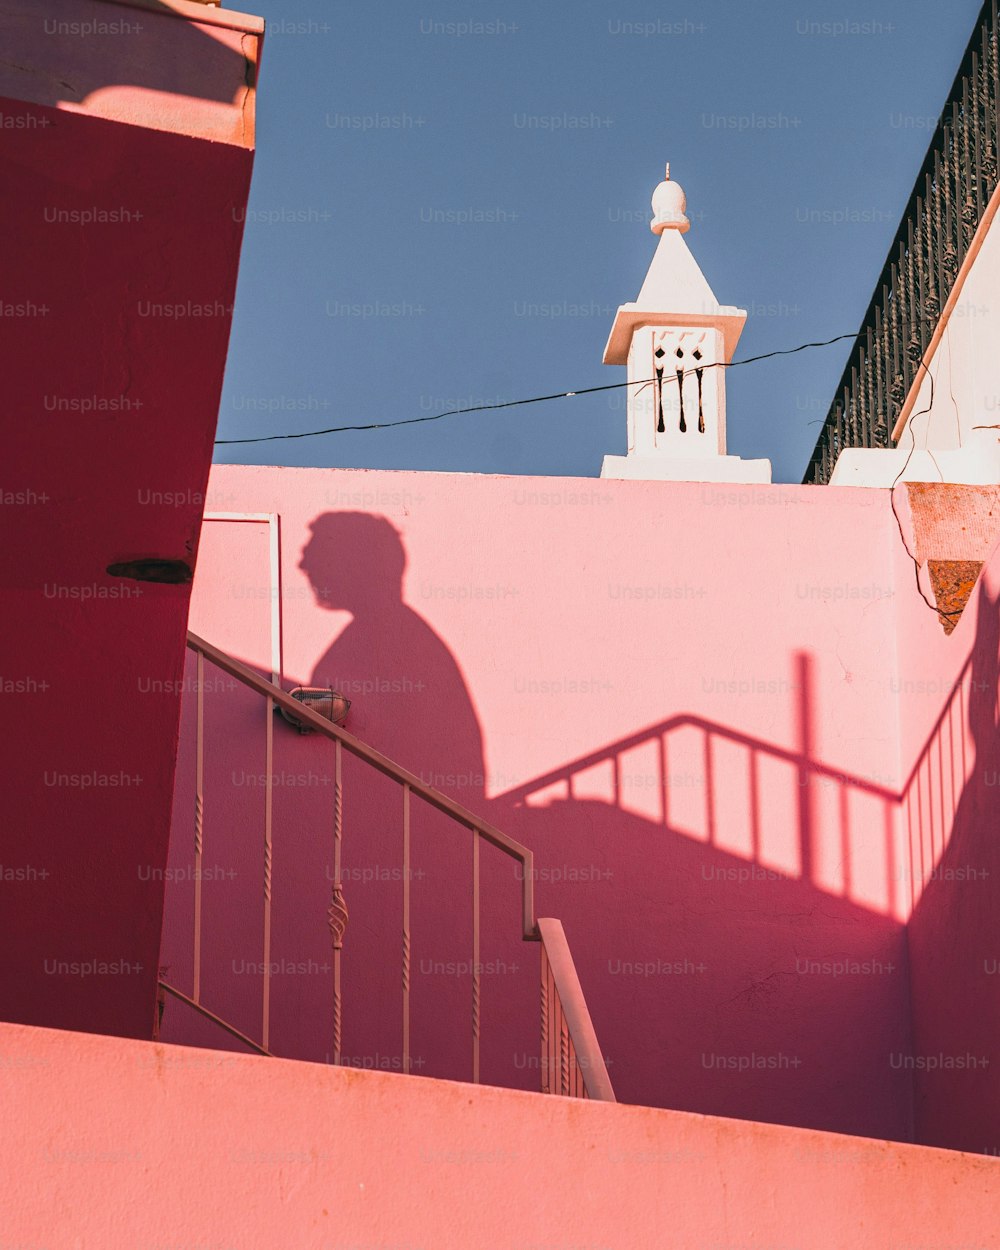 La sombra de un hombre en una pared rosa